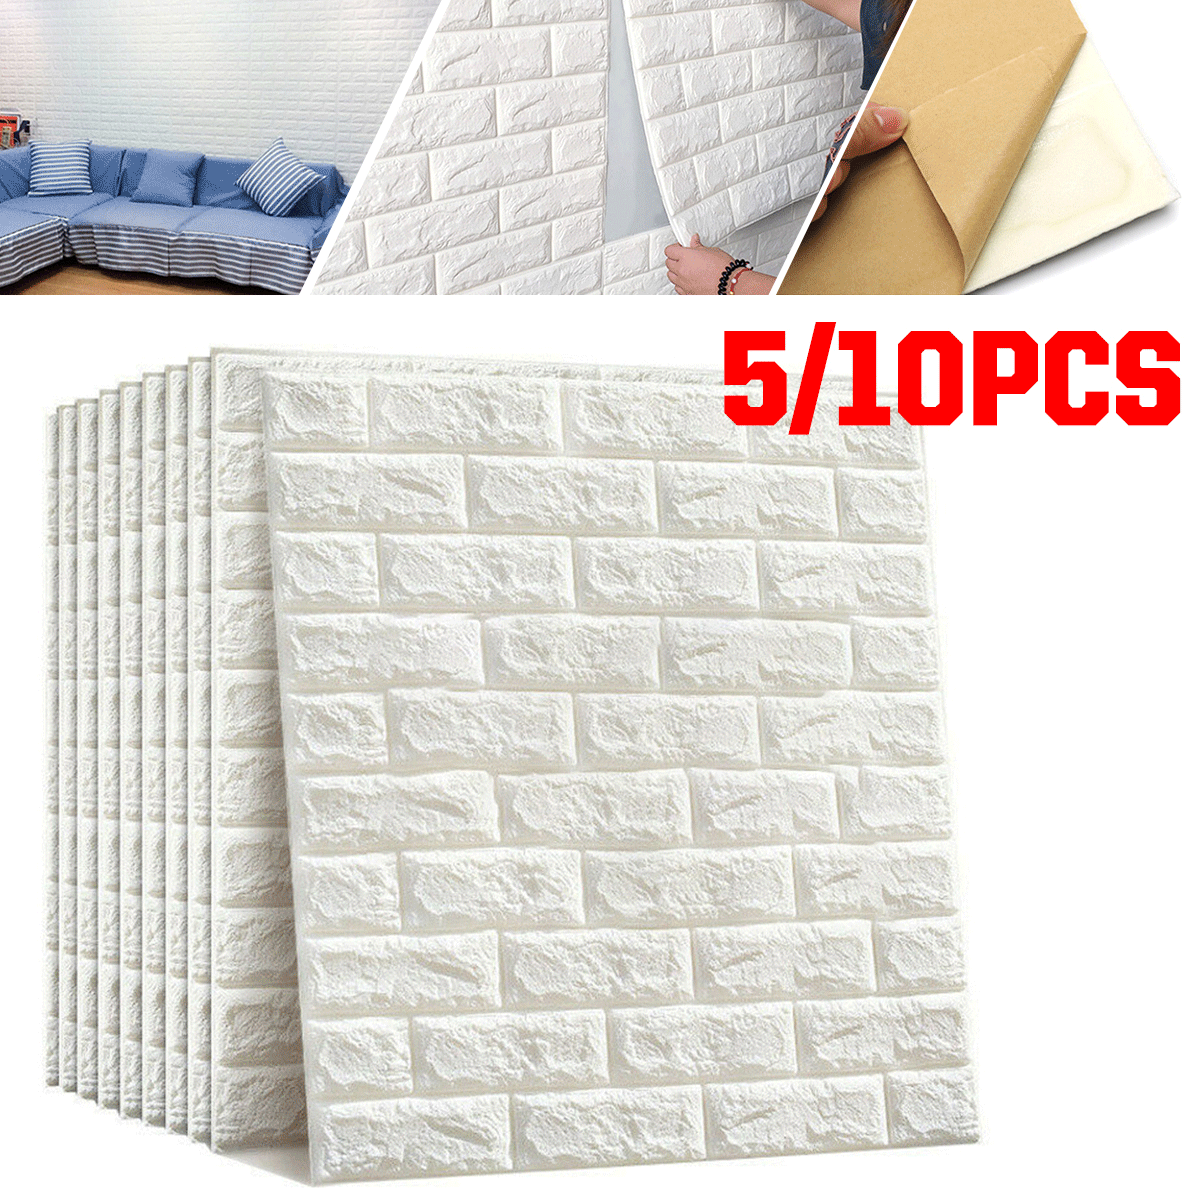 3D Tile Brick Wall Stickers Self-adhesive Waterproof Foam Panel Sticker Decors 